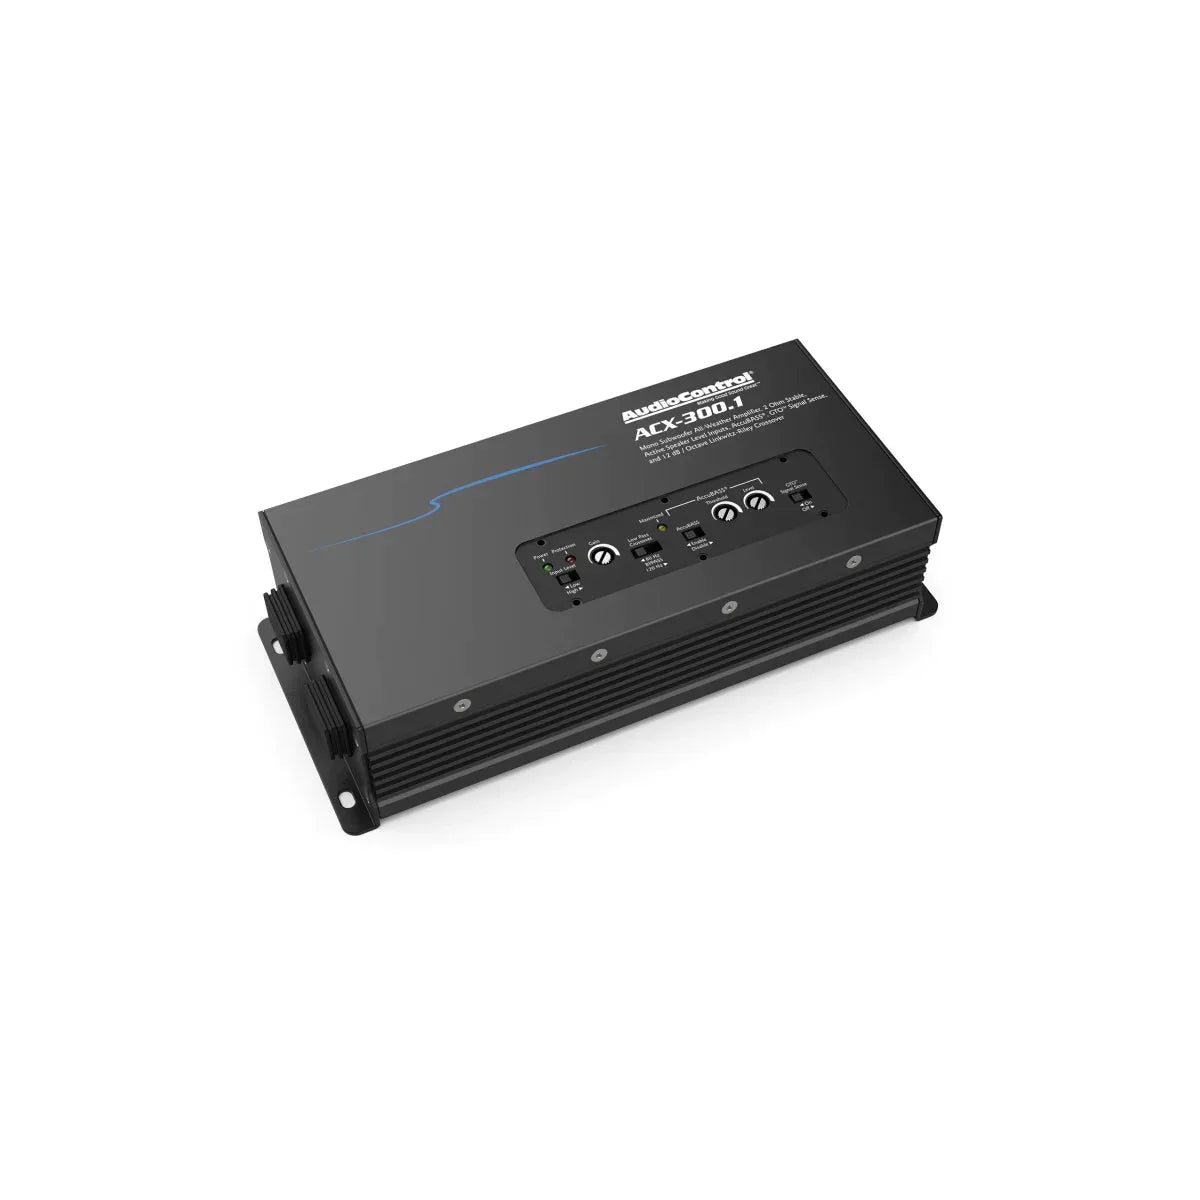 Audiocontrol-ACX-300.1-1-Kanal Verstärker-Masori.de